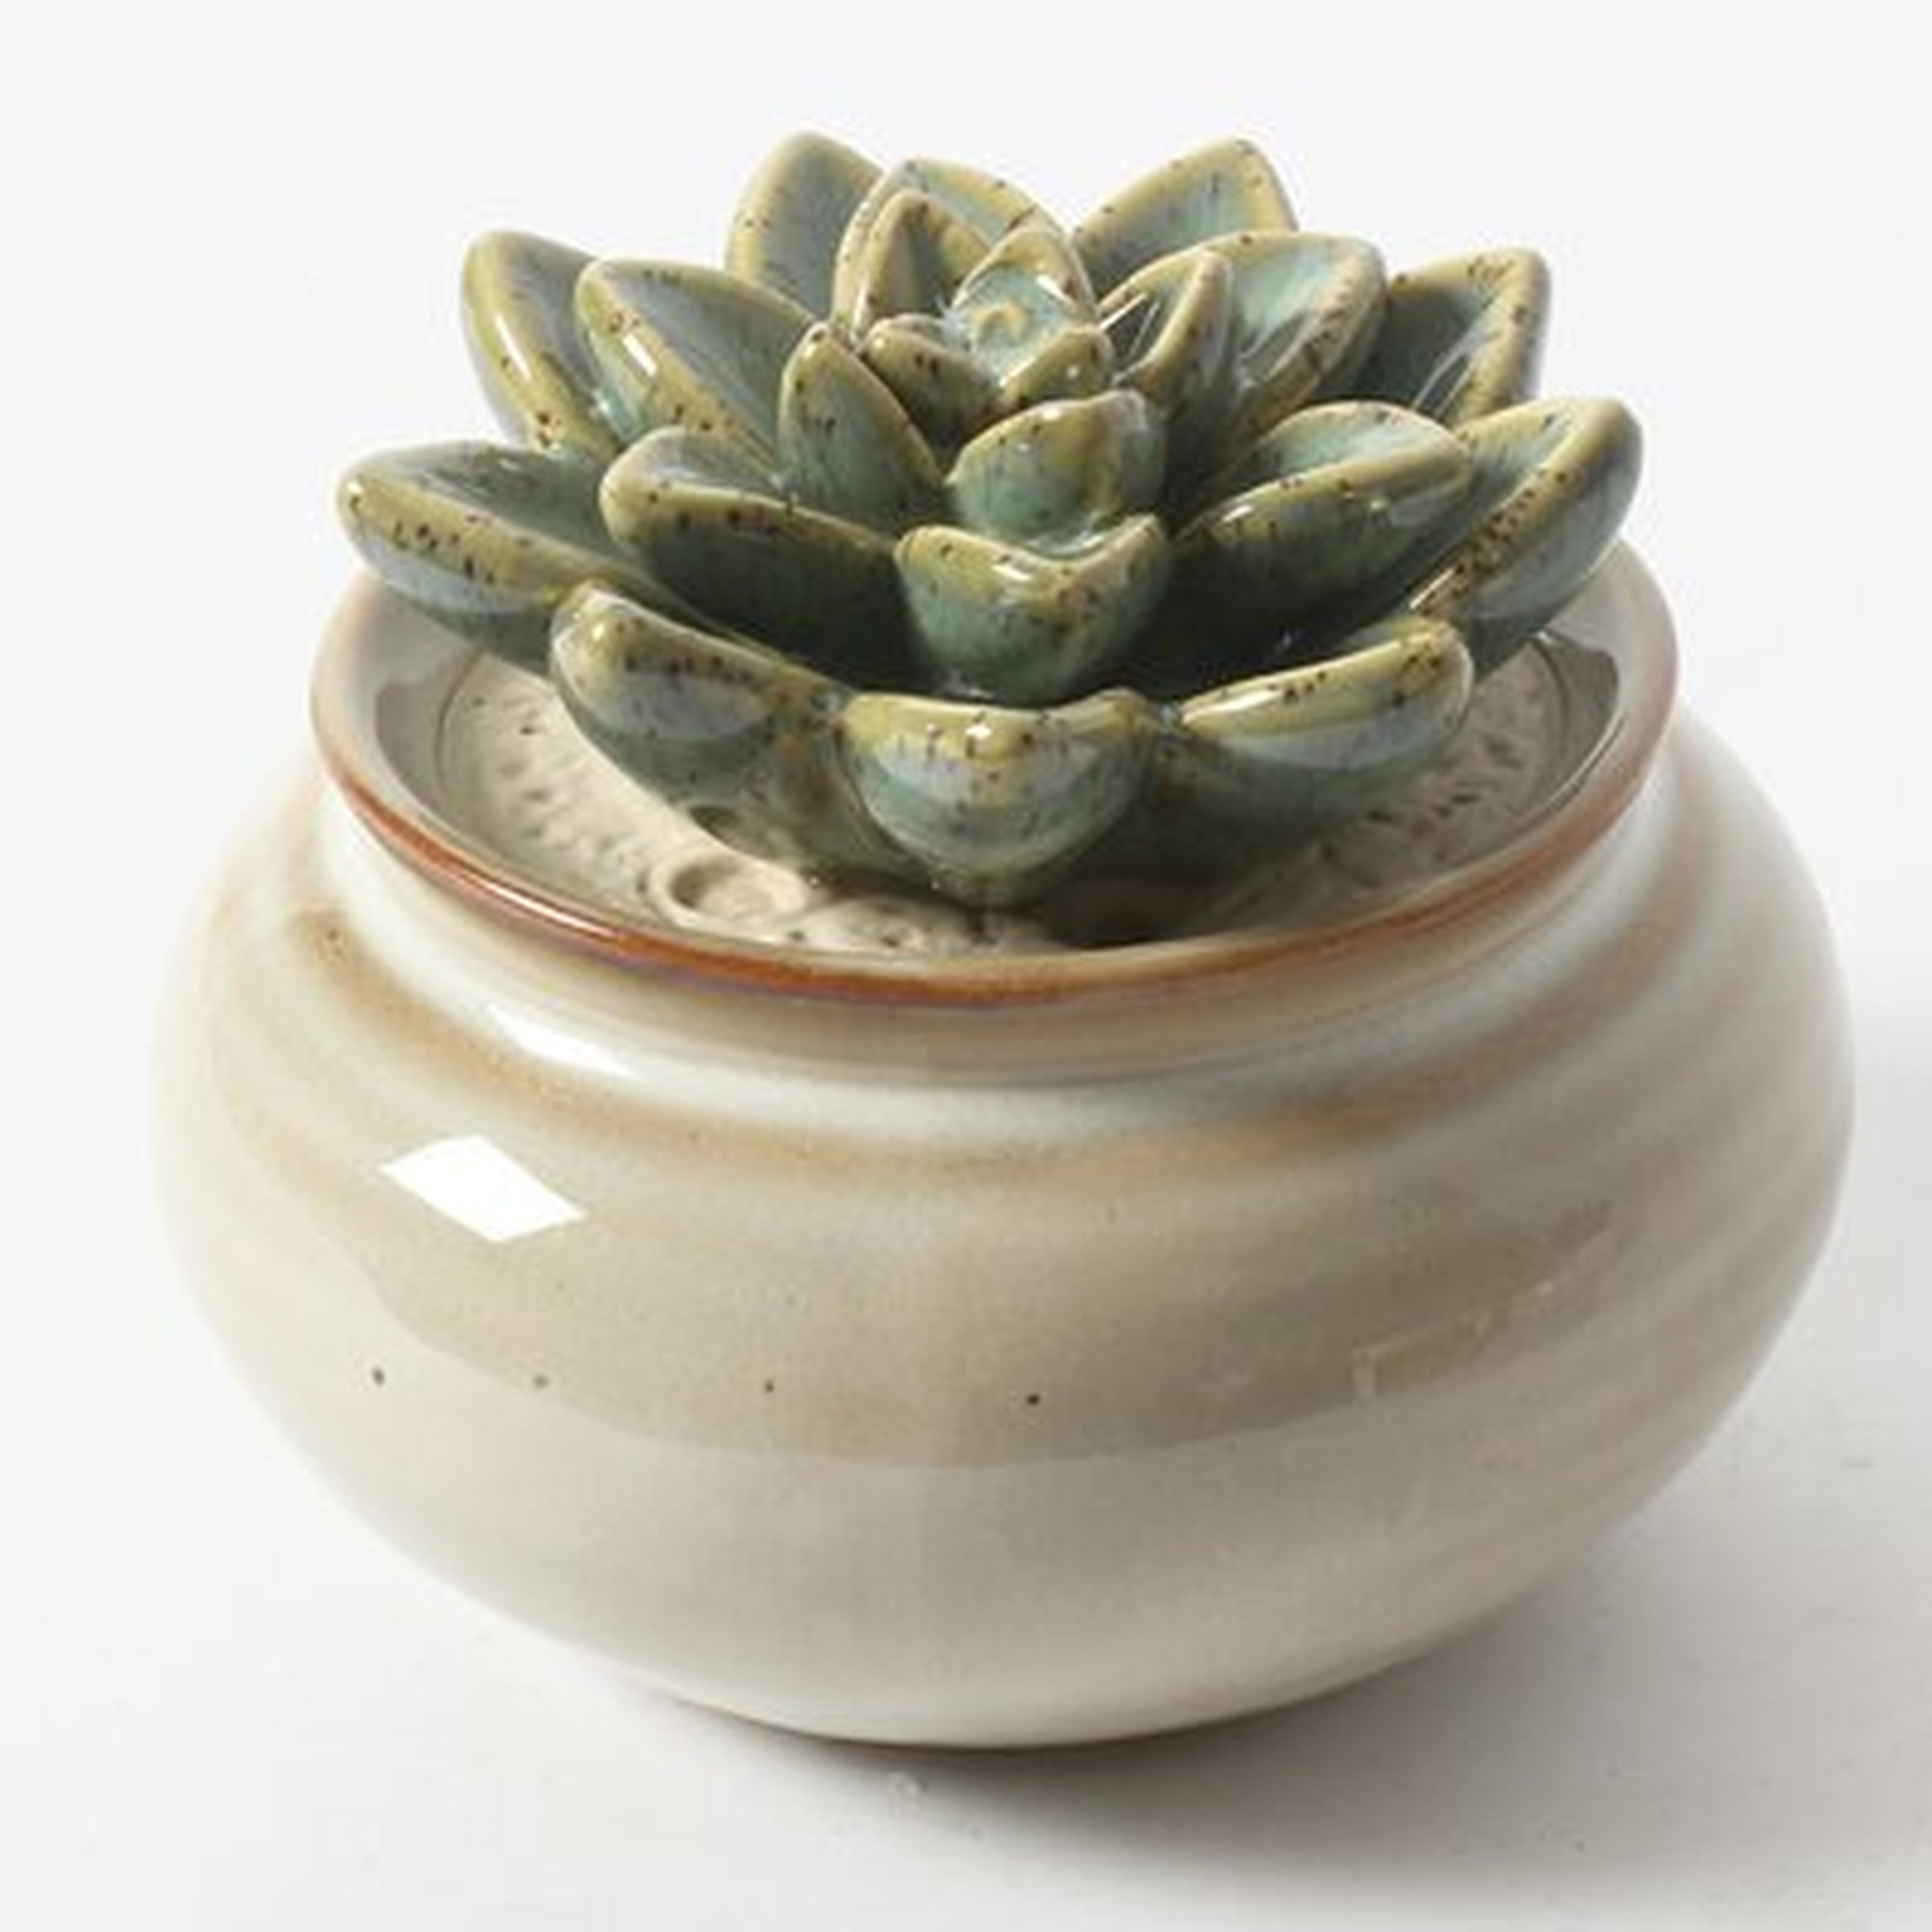 Crewkerne Ceramic Potted Haworthia Succulent Table Decor (Set of 2) - Wayfair